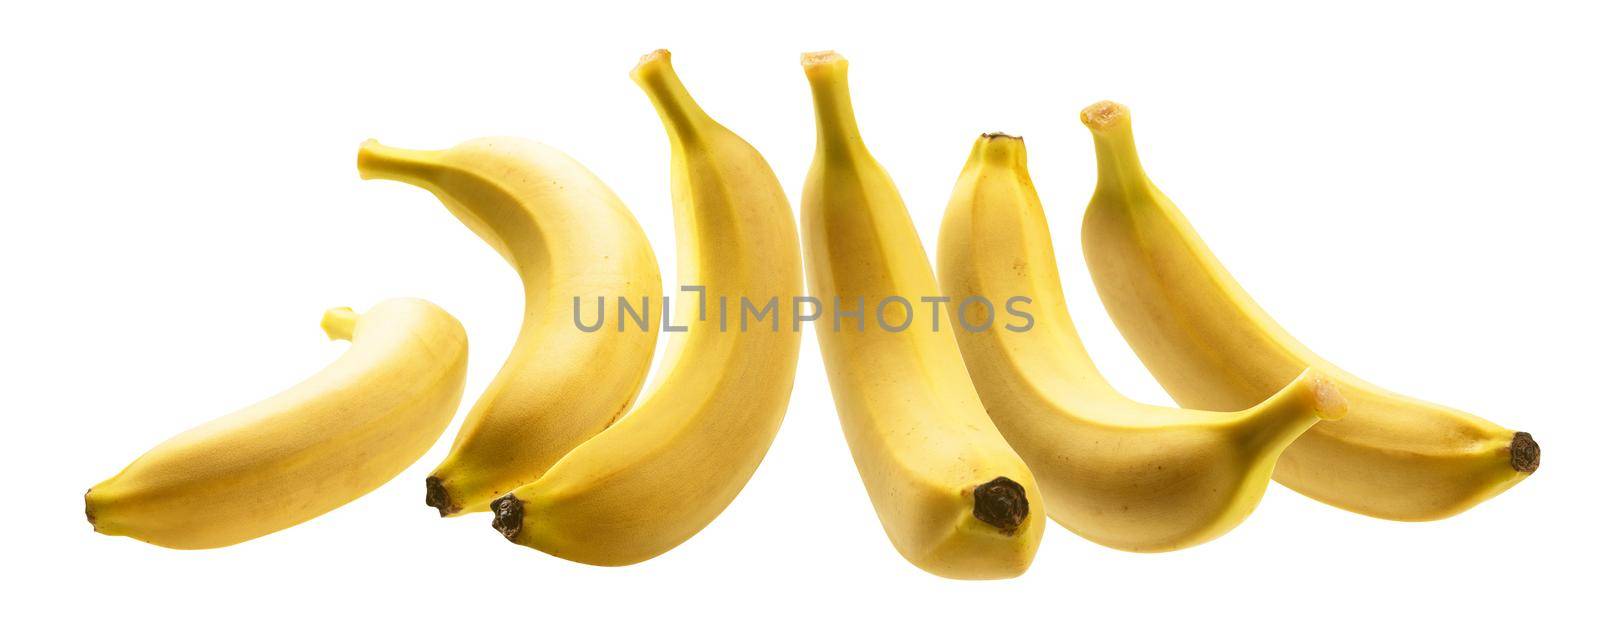 Yellow bananas levitate on a white background.